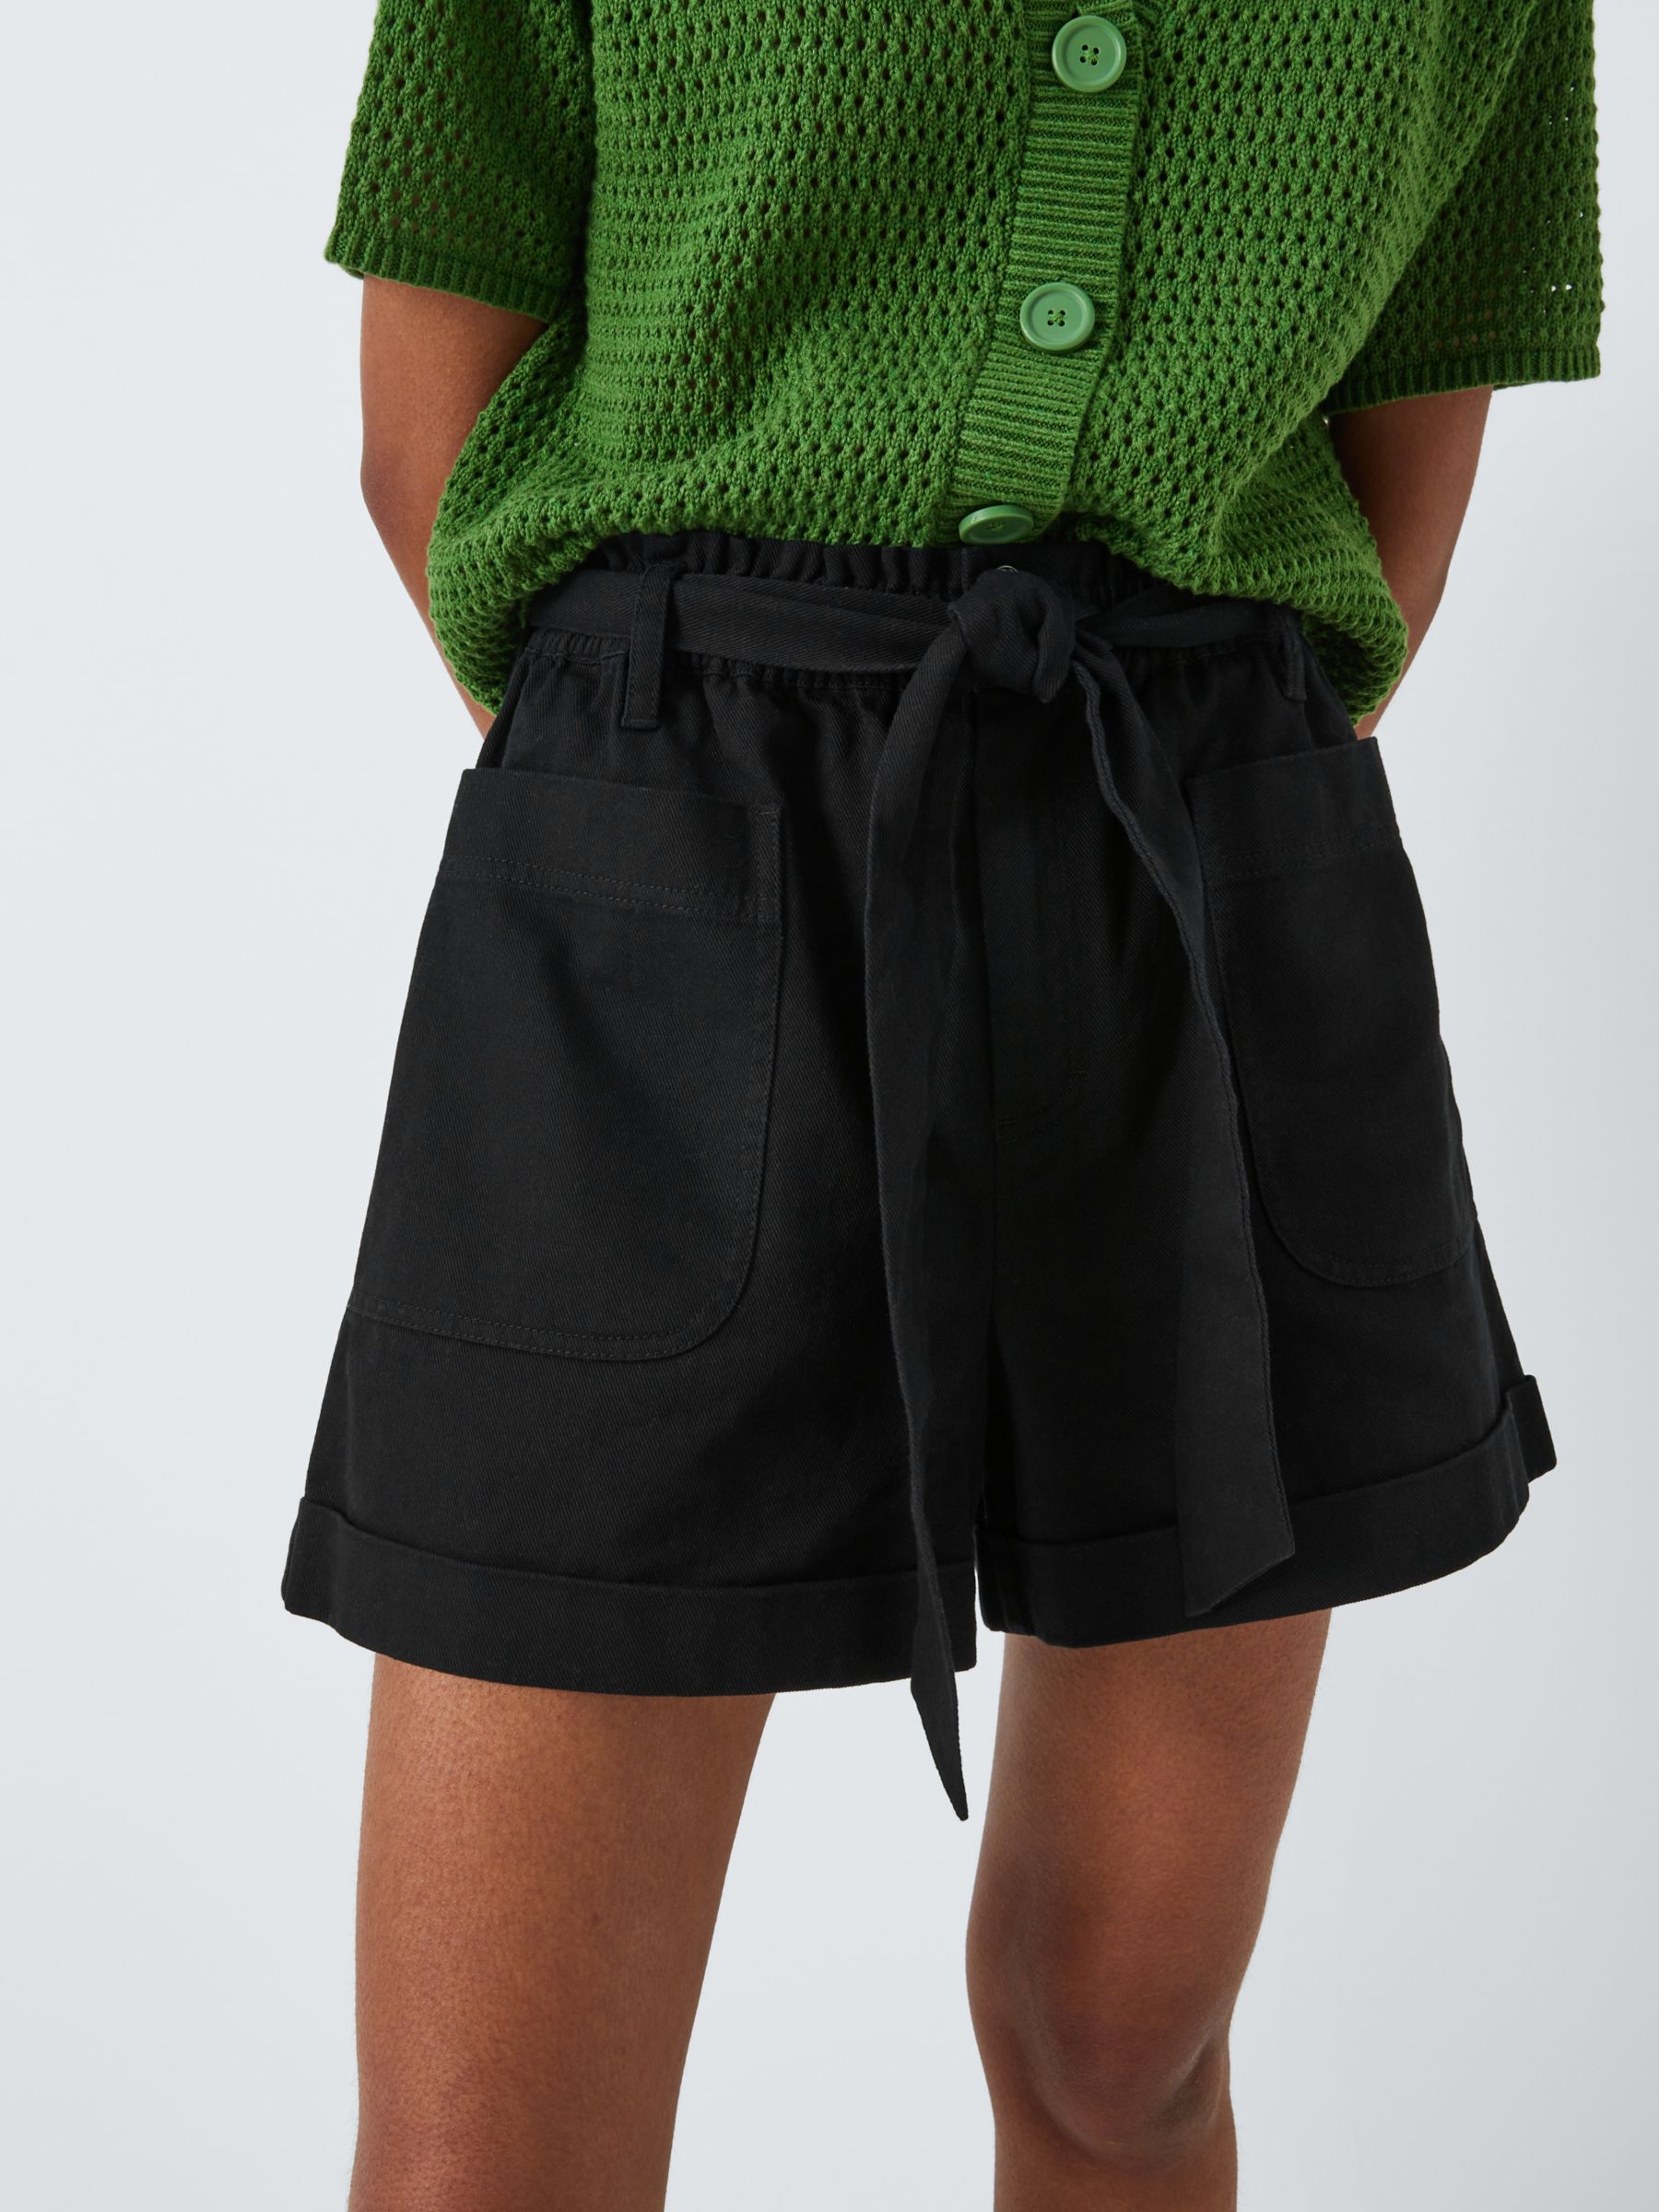 John Lewis ANYDAY Paperbag Cotton Twill Shorts, Black, 6